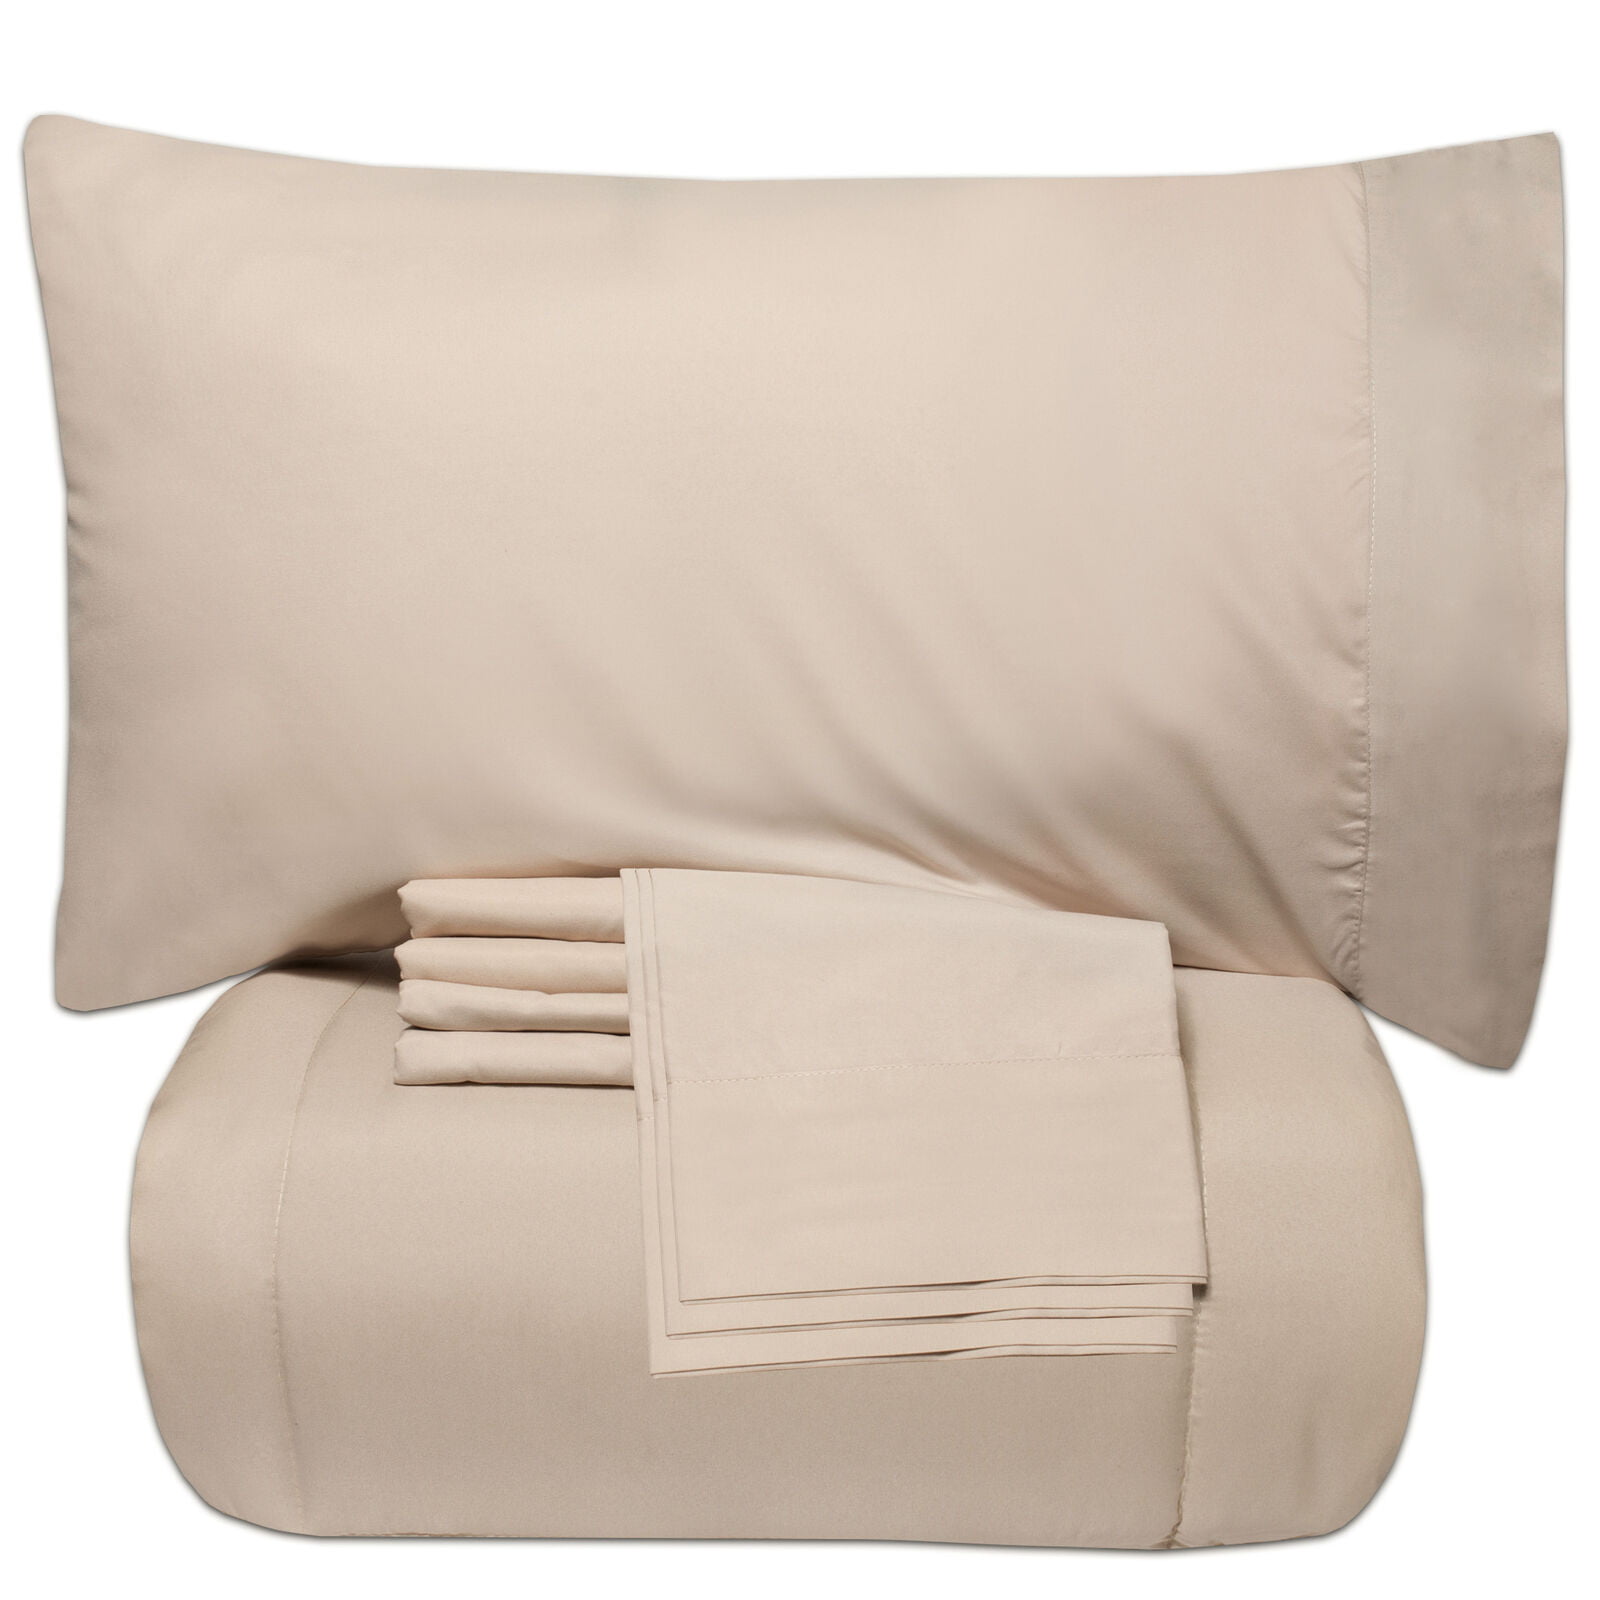 7 Piece Bed-In-A-Bag Down Alternative Comforter & Sheet Set Lg Color Selection 